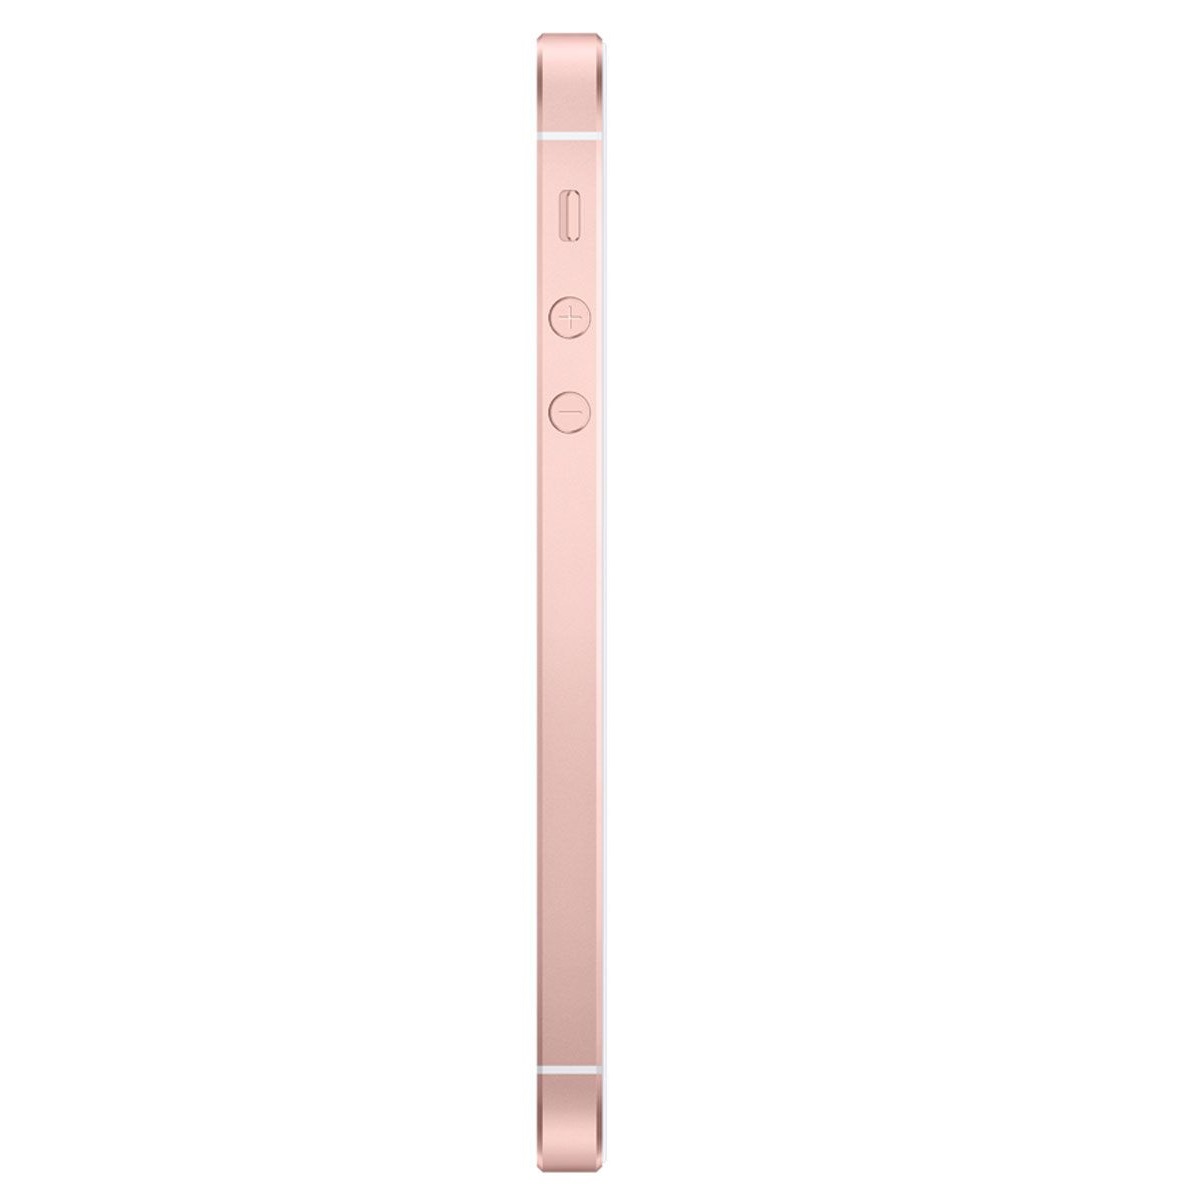 Смартфон Apple iPhone SE 32Gb Rose Gold (MP852RU/A)